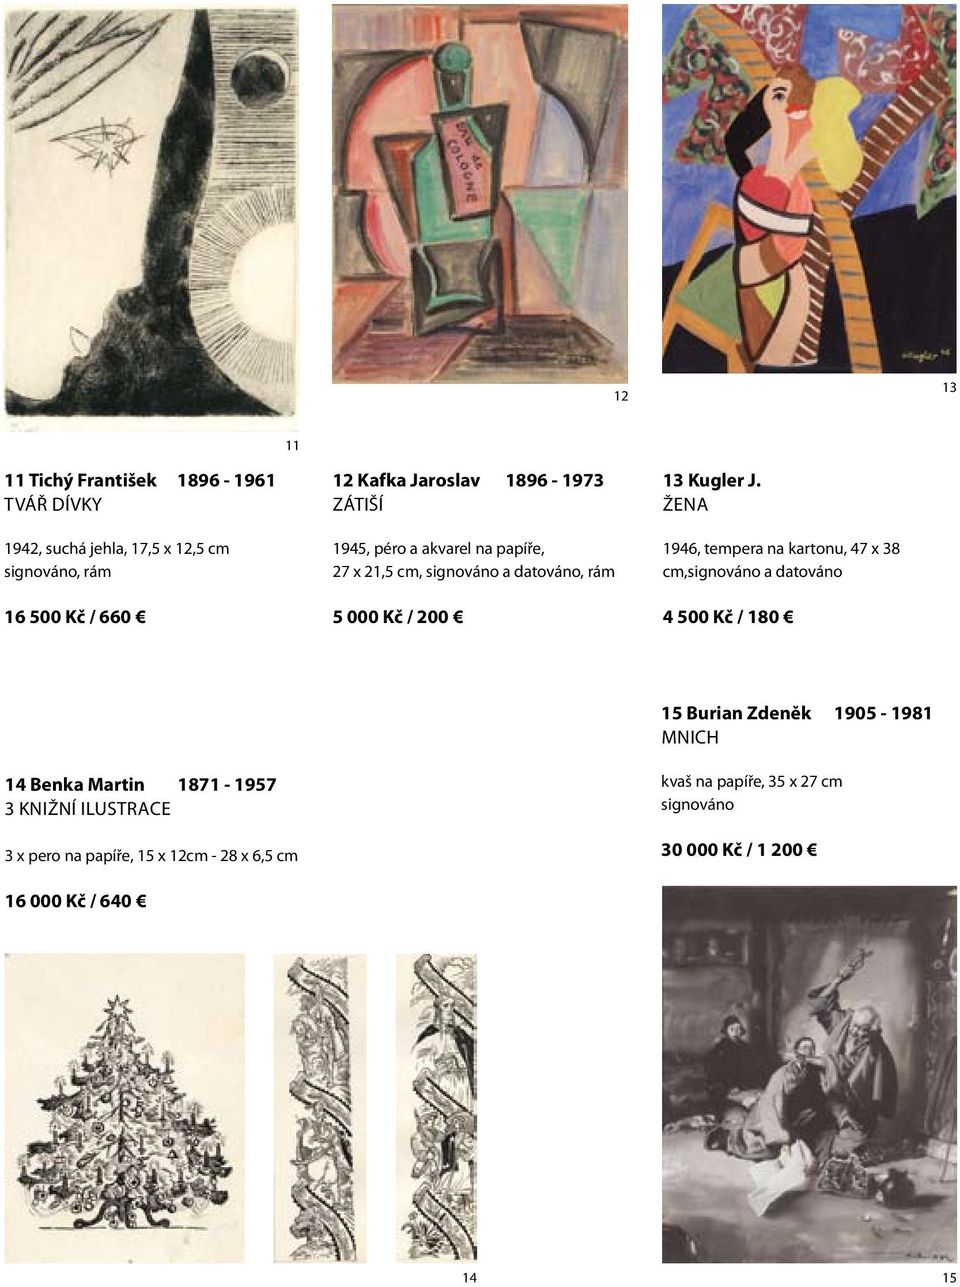 Žena 1946, tempera na kartonu, 47 x 38 cm, 4 500 Kč / 180 14 Benka Martin 1871-1957 3 knižní ilustrace 3 x pero na